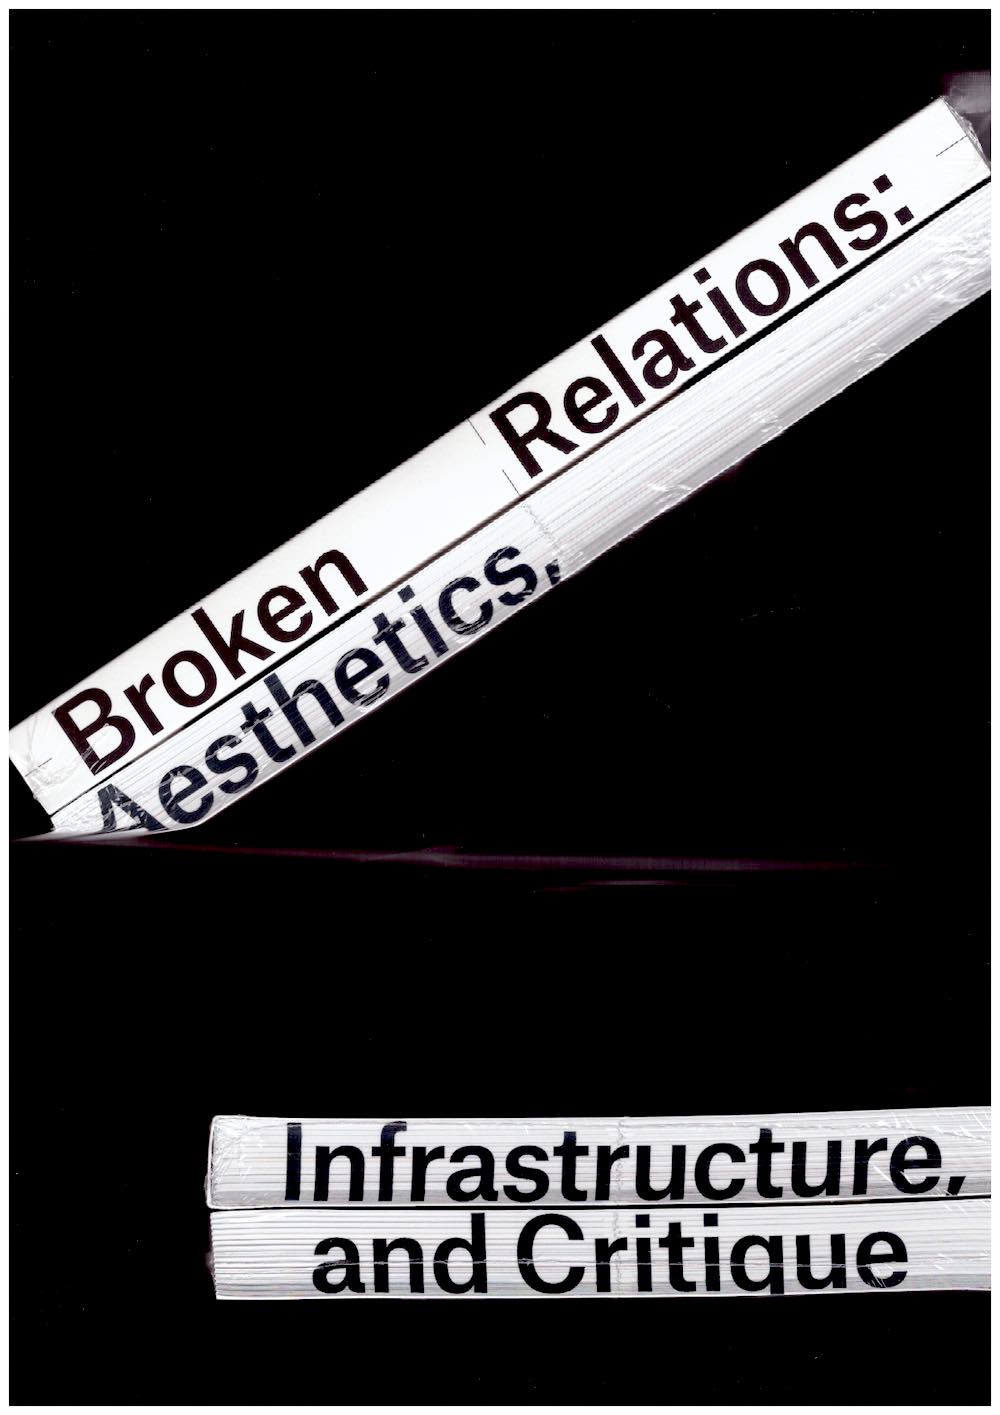 BECK, Martin; VON BISMARCK, Beatrice; BUCHMANN, Sabeth; LAFER, Ilse (eds.) - Broken Relations: Infrastructure, Aesthetic, and Critique